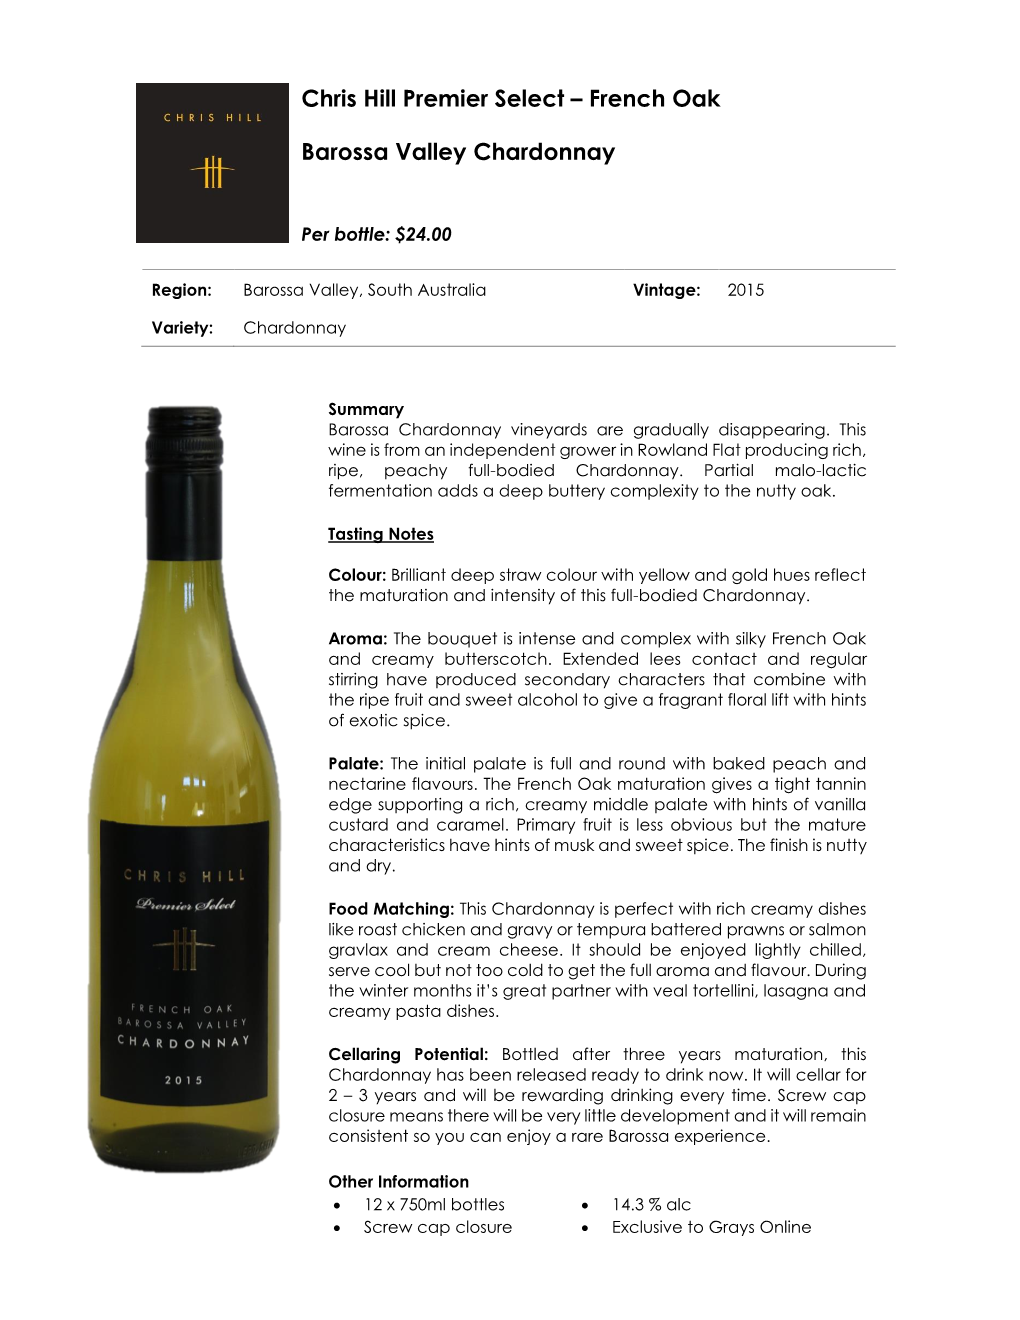 Chris Hill Premier Select – French Oak Barossa Valley Chardonnay